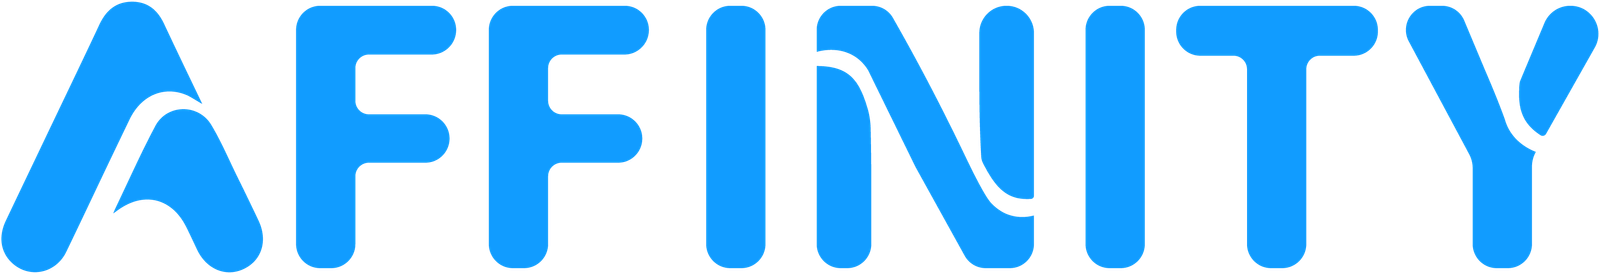 logo affinity